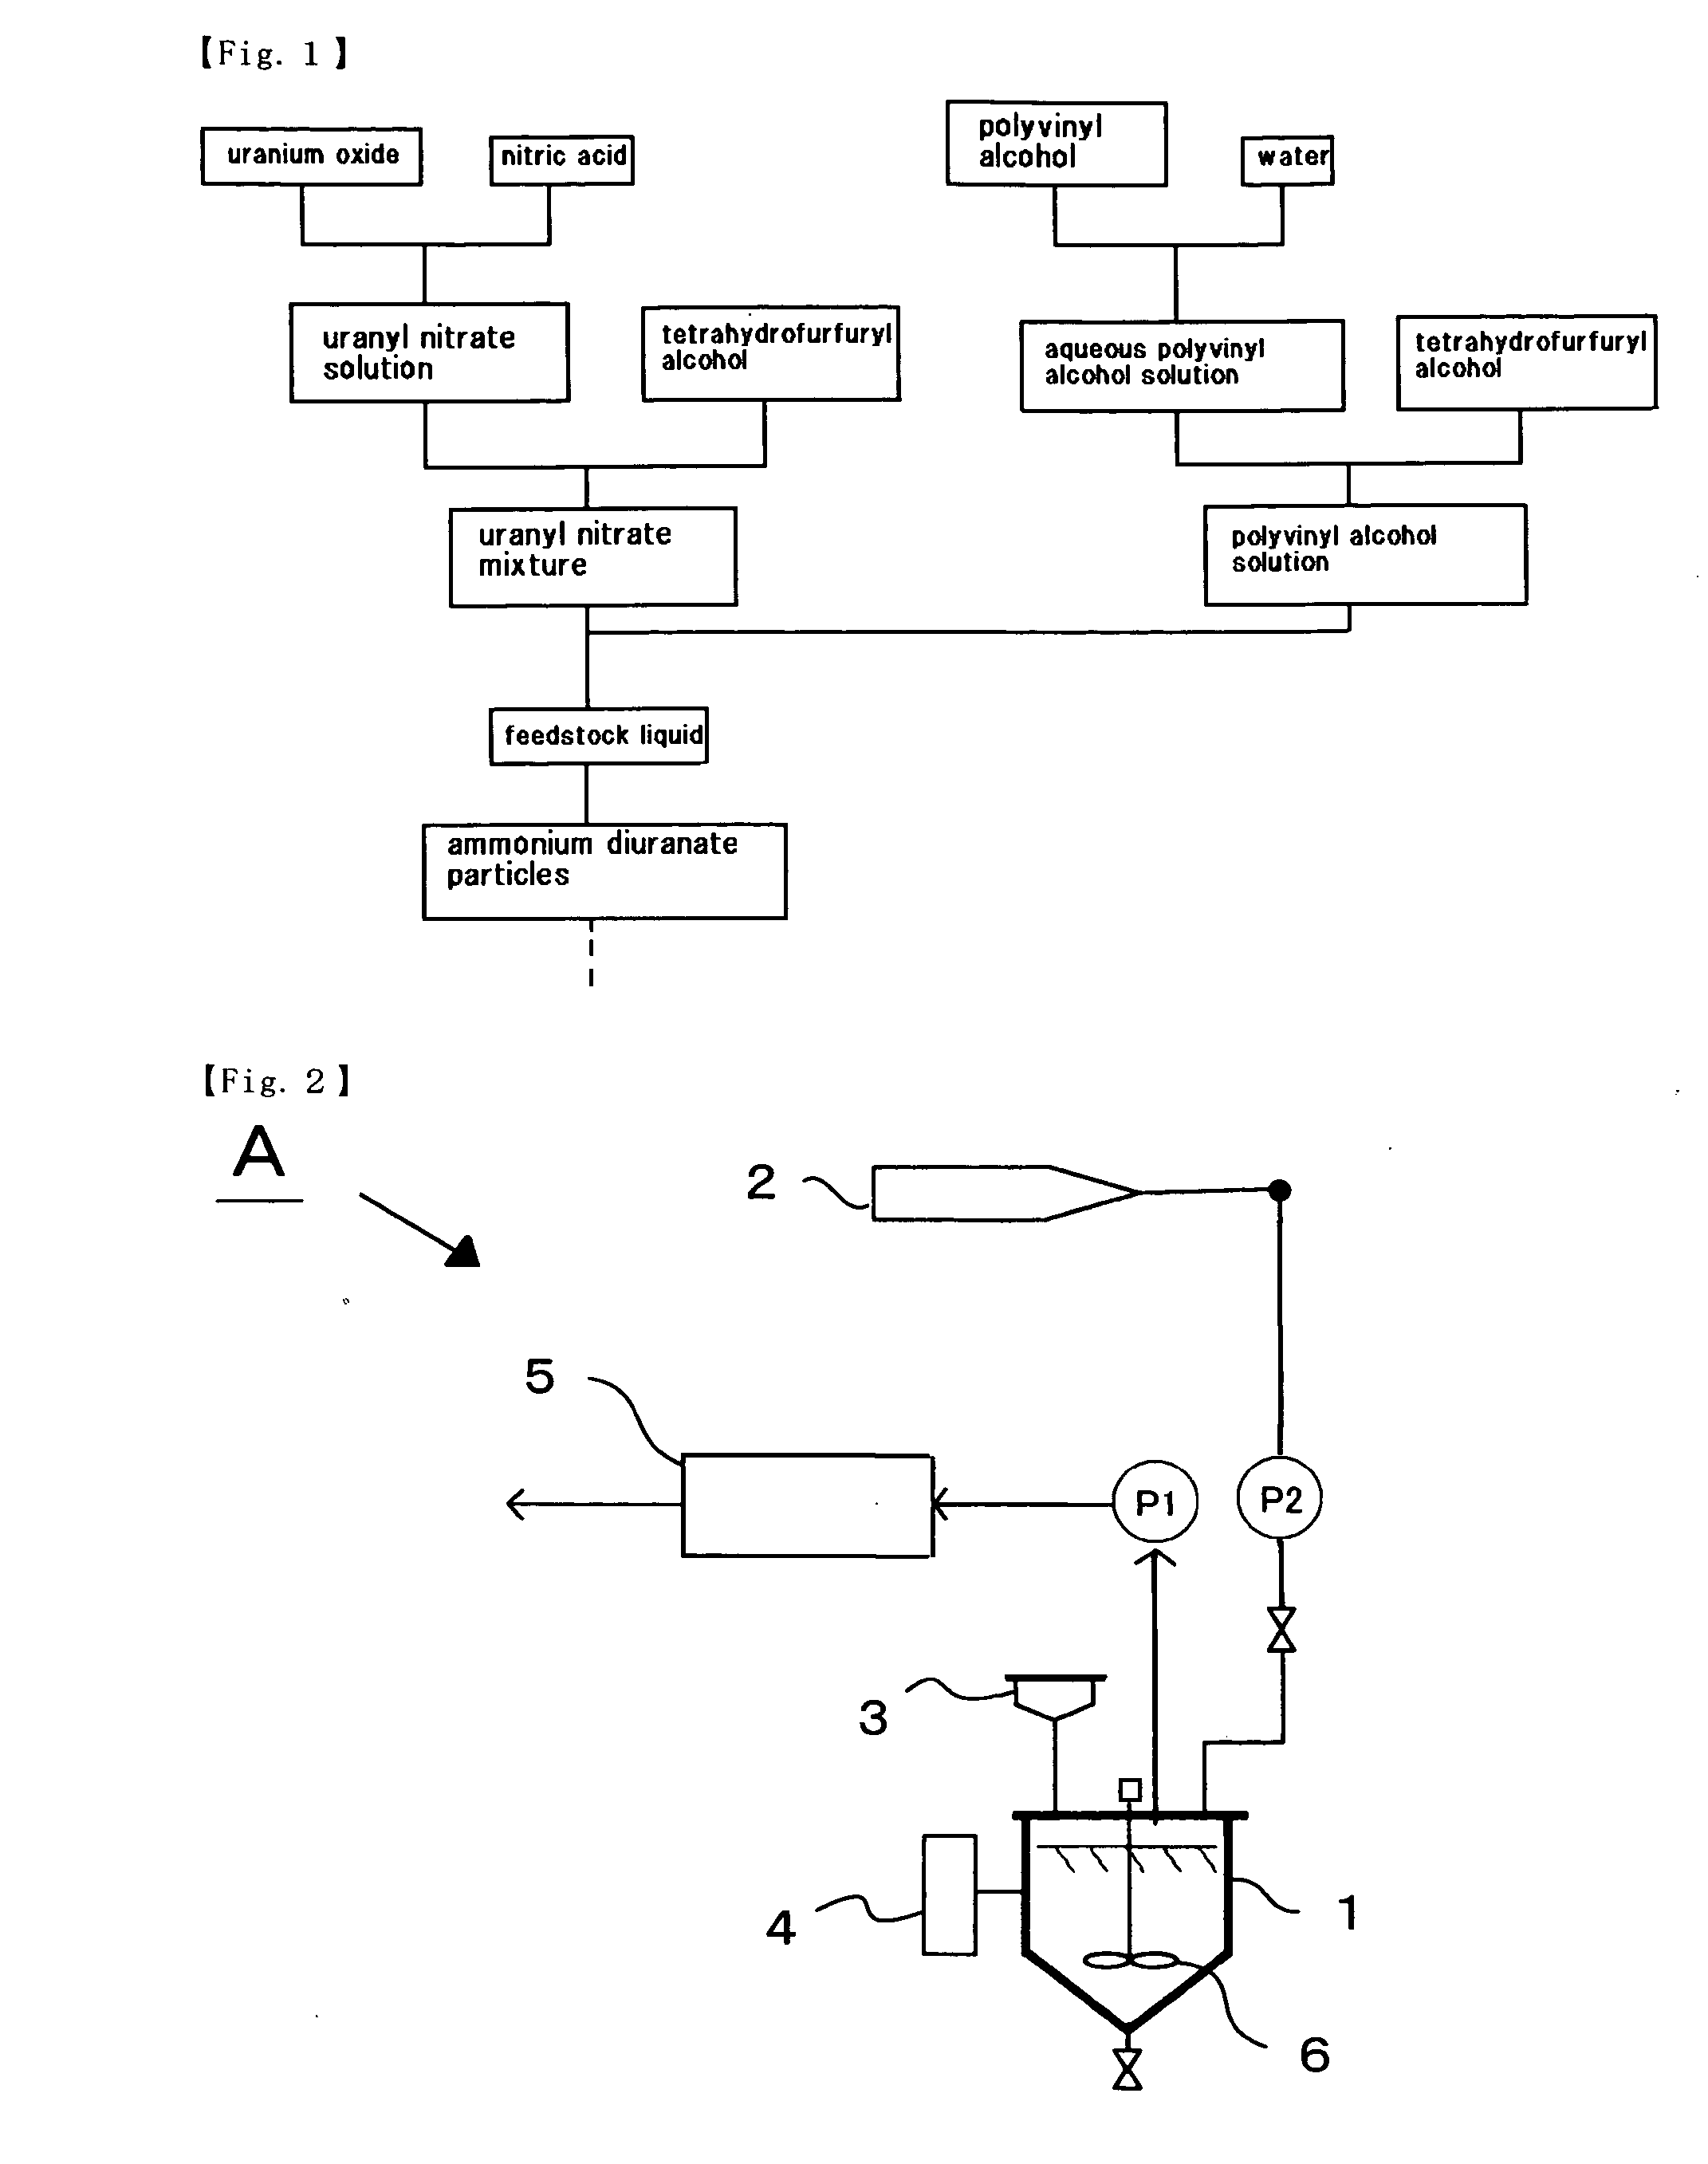 Method of preparing feedstock liquid, method of preparing uranyl nitrate solution, and method of preparing polyvinyl alcohol solution